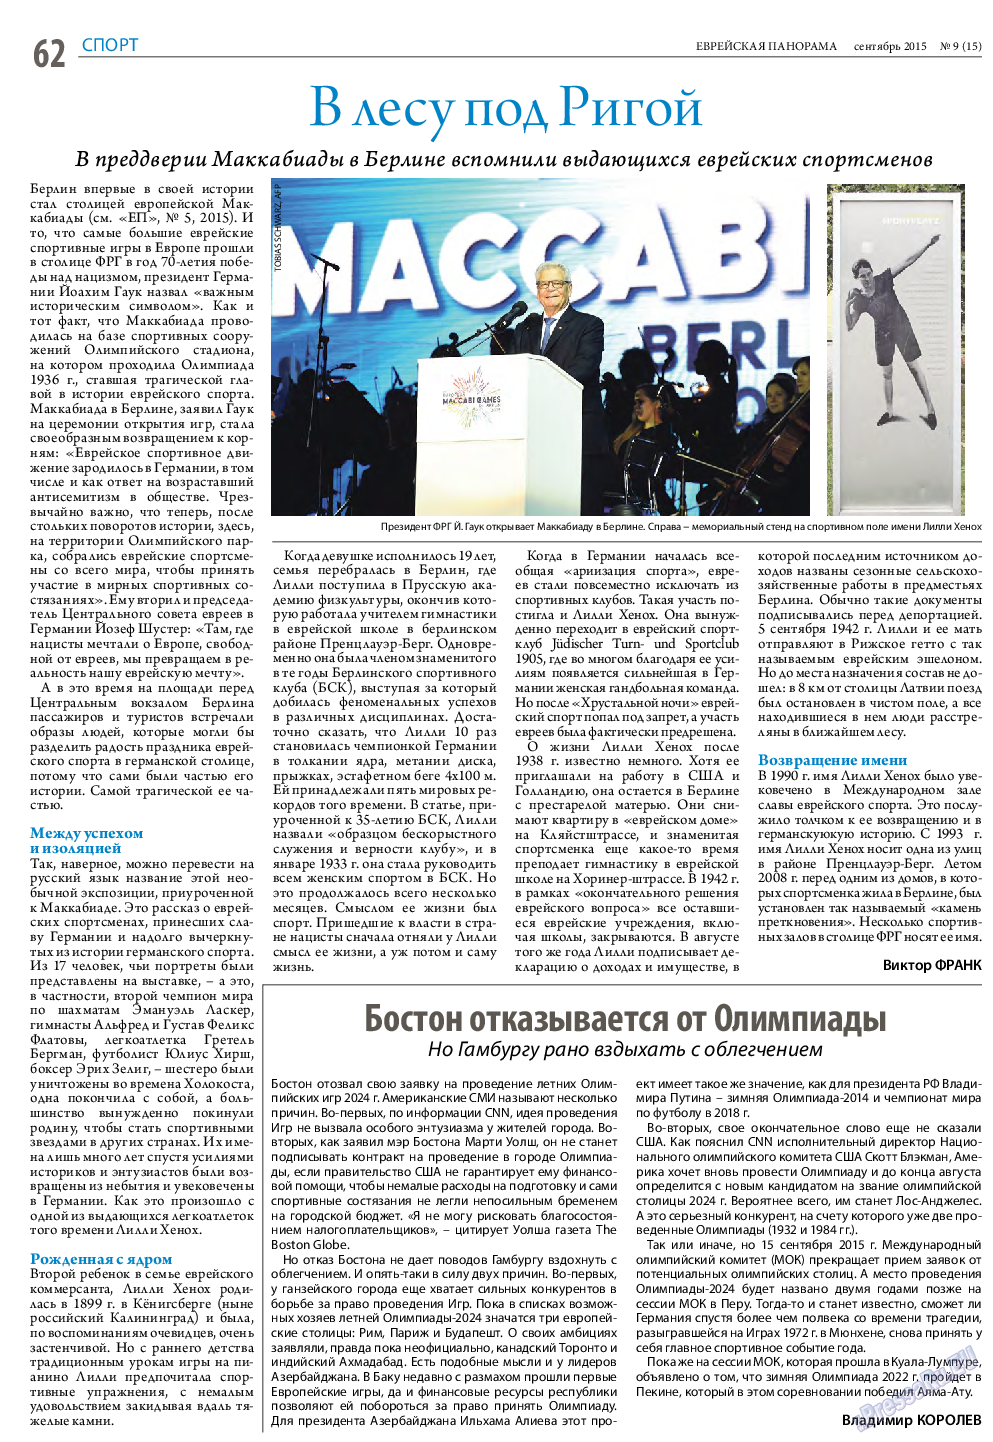 Еврейская панорама, газета. 2015 №9 стр.62